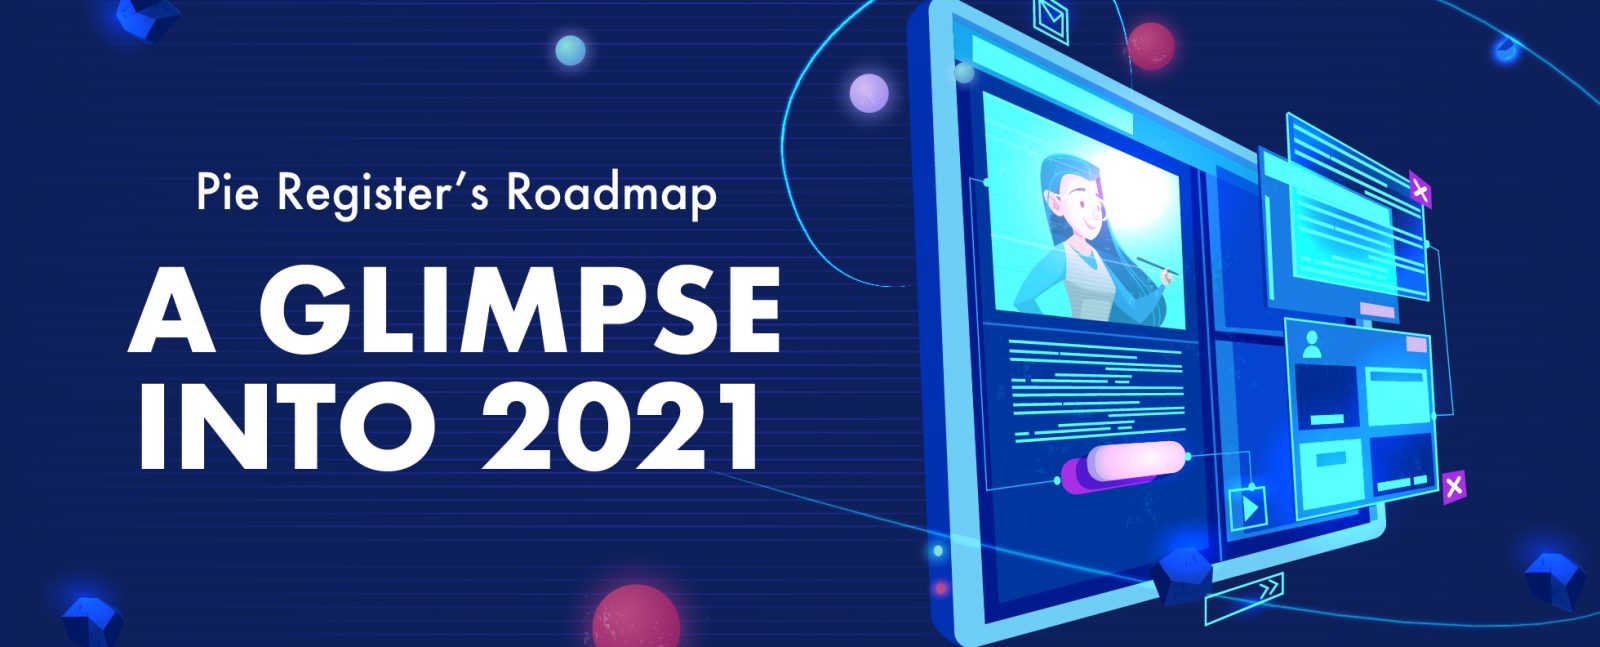 Pie Register’s Roadmap - A Glimpse into 2021